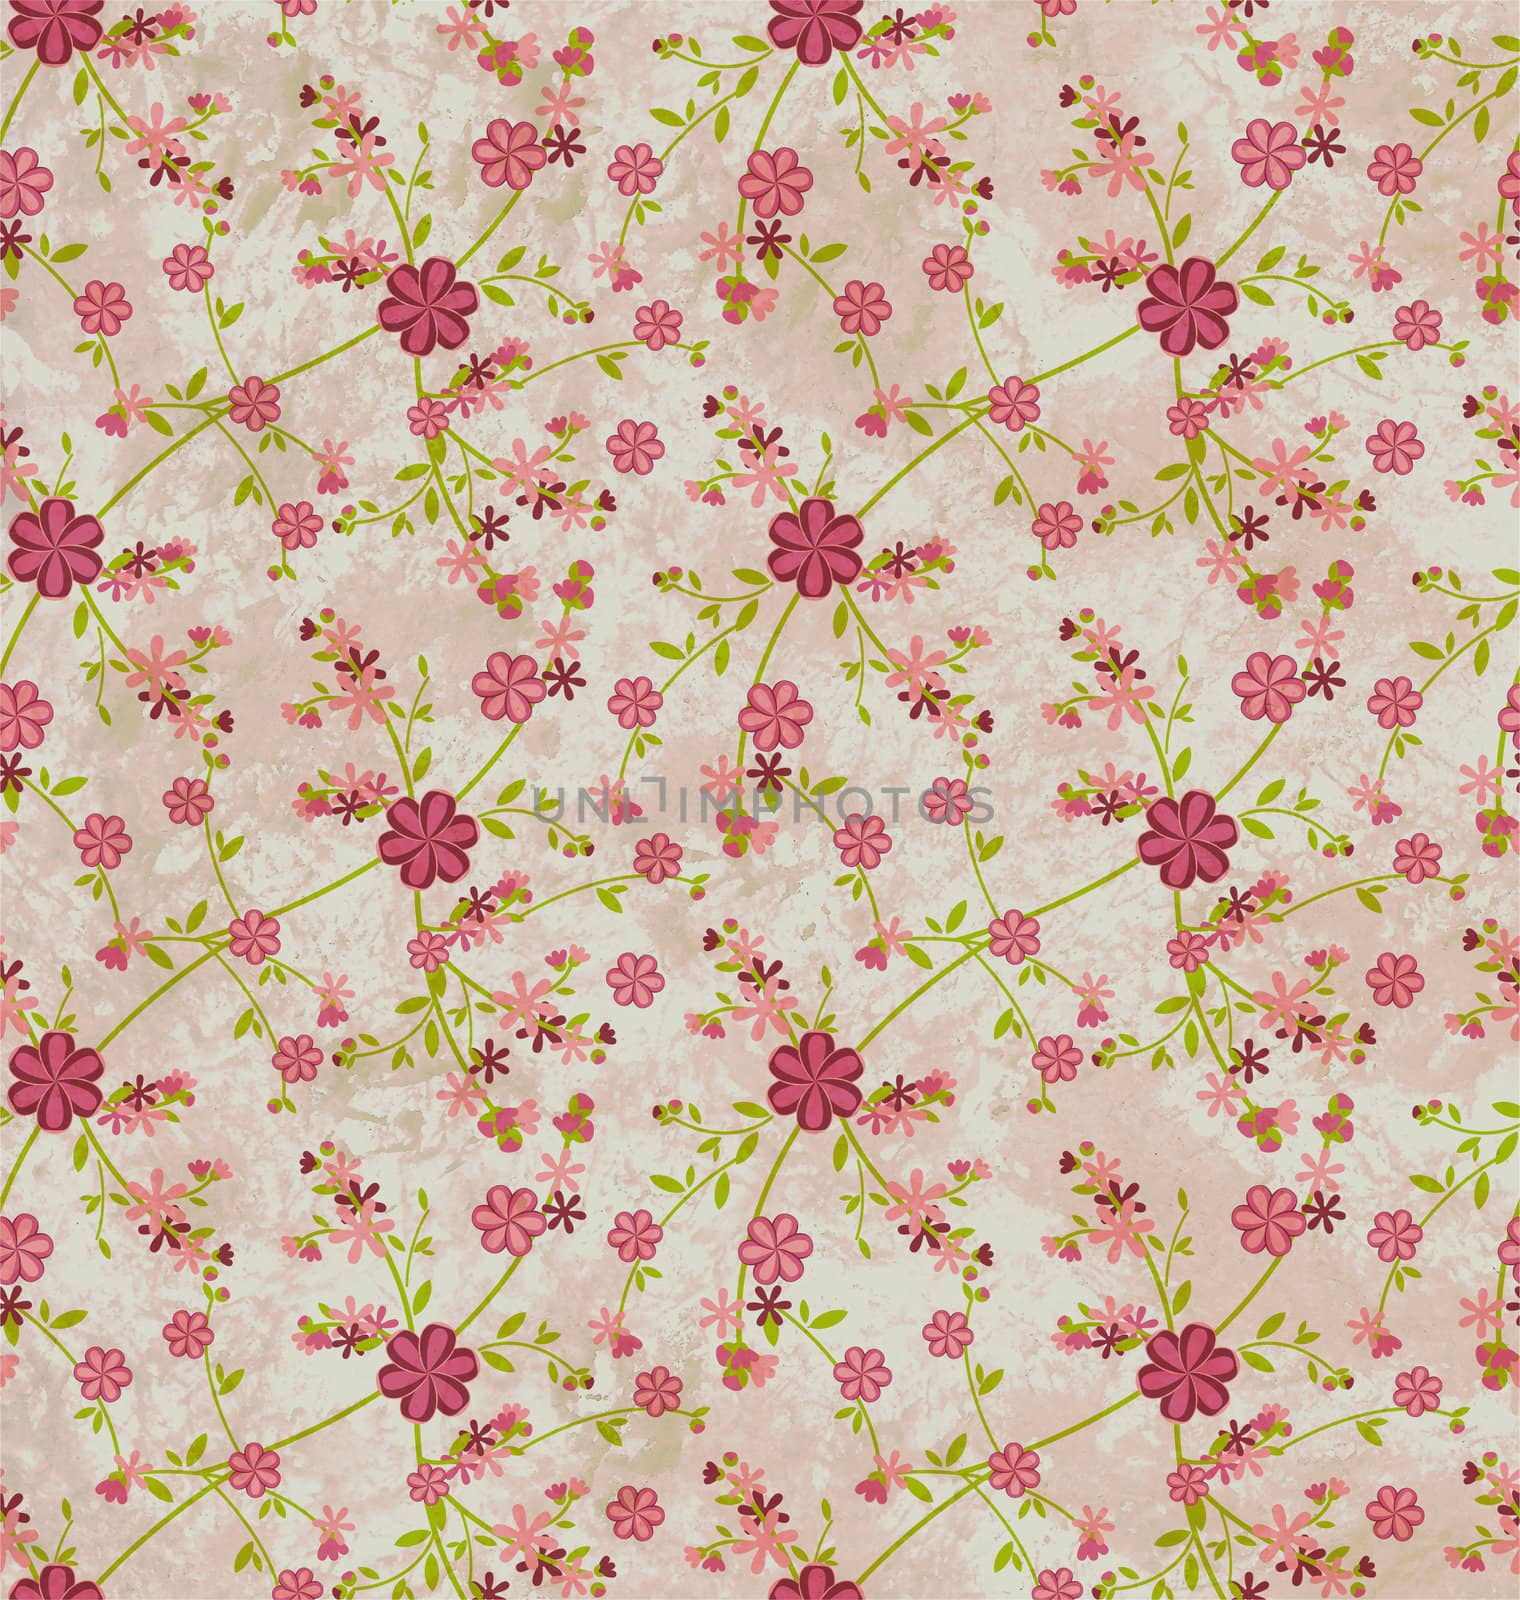 flowers pattern paper grunge vintage background